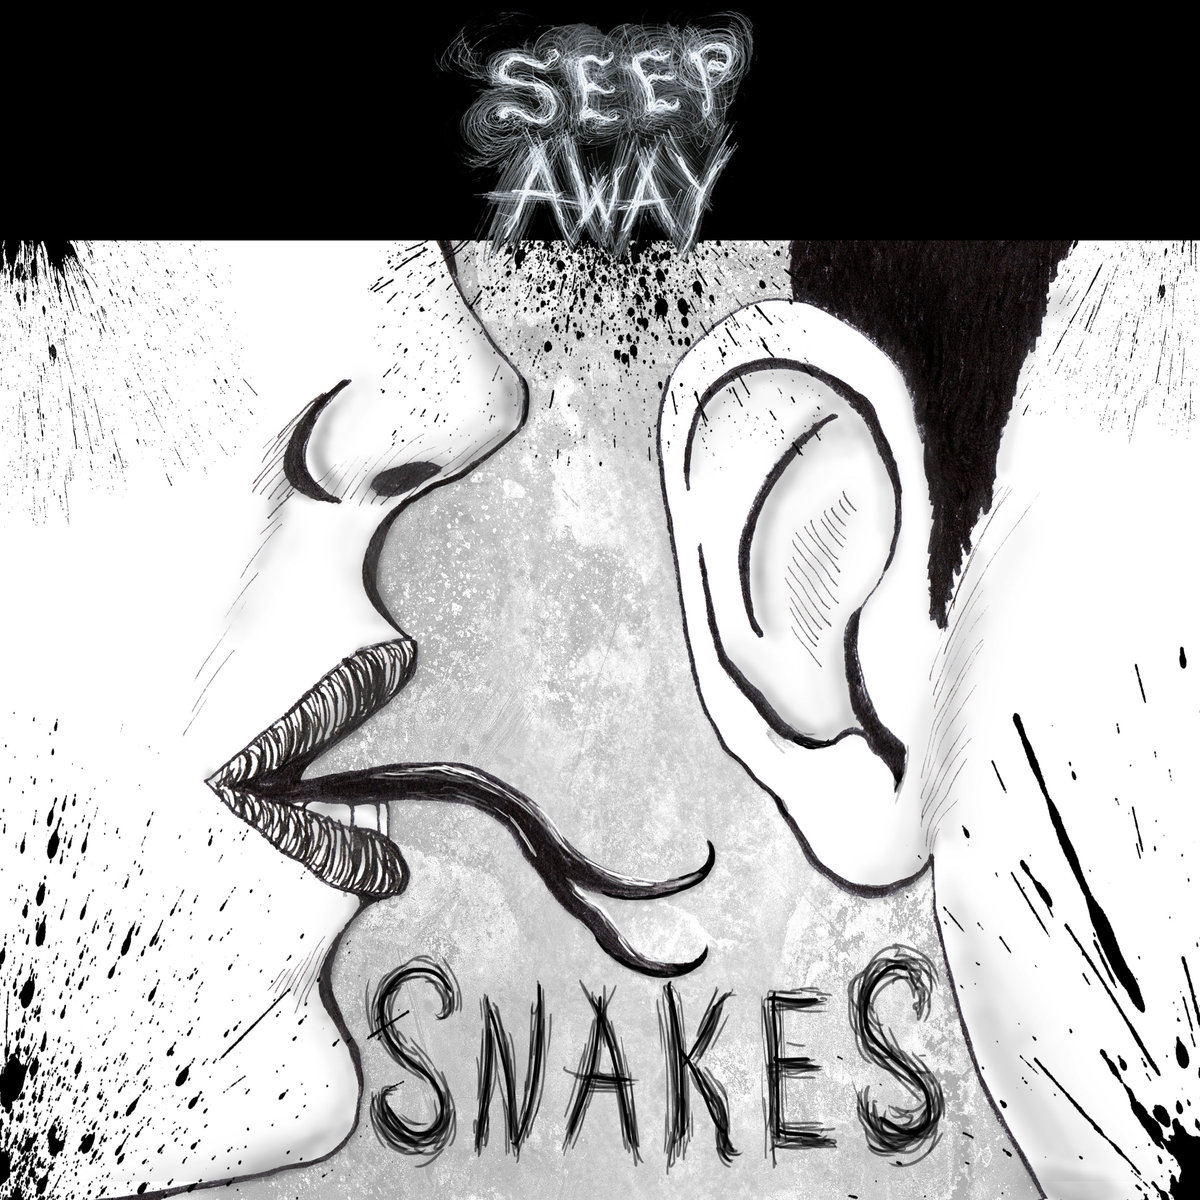 SEEP AWAY - Snakes (Single)